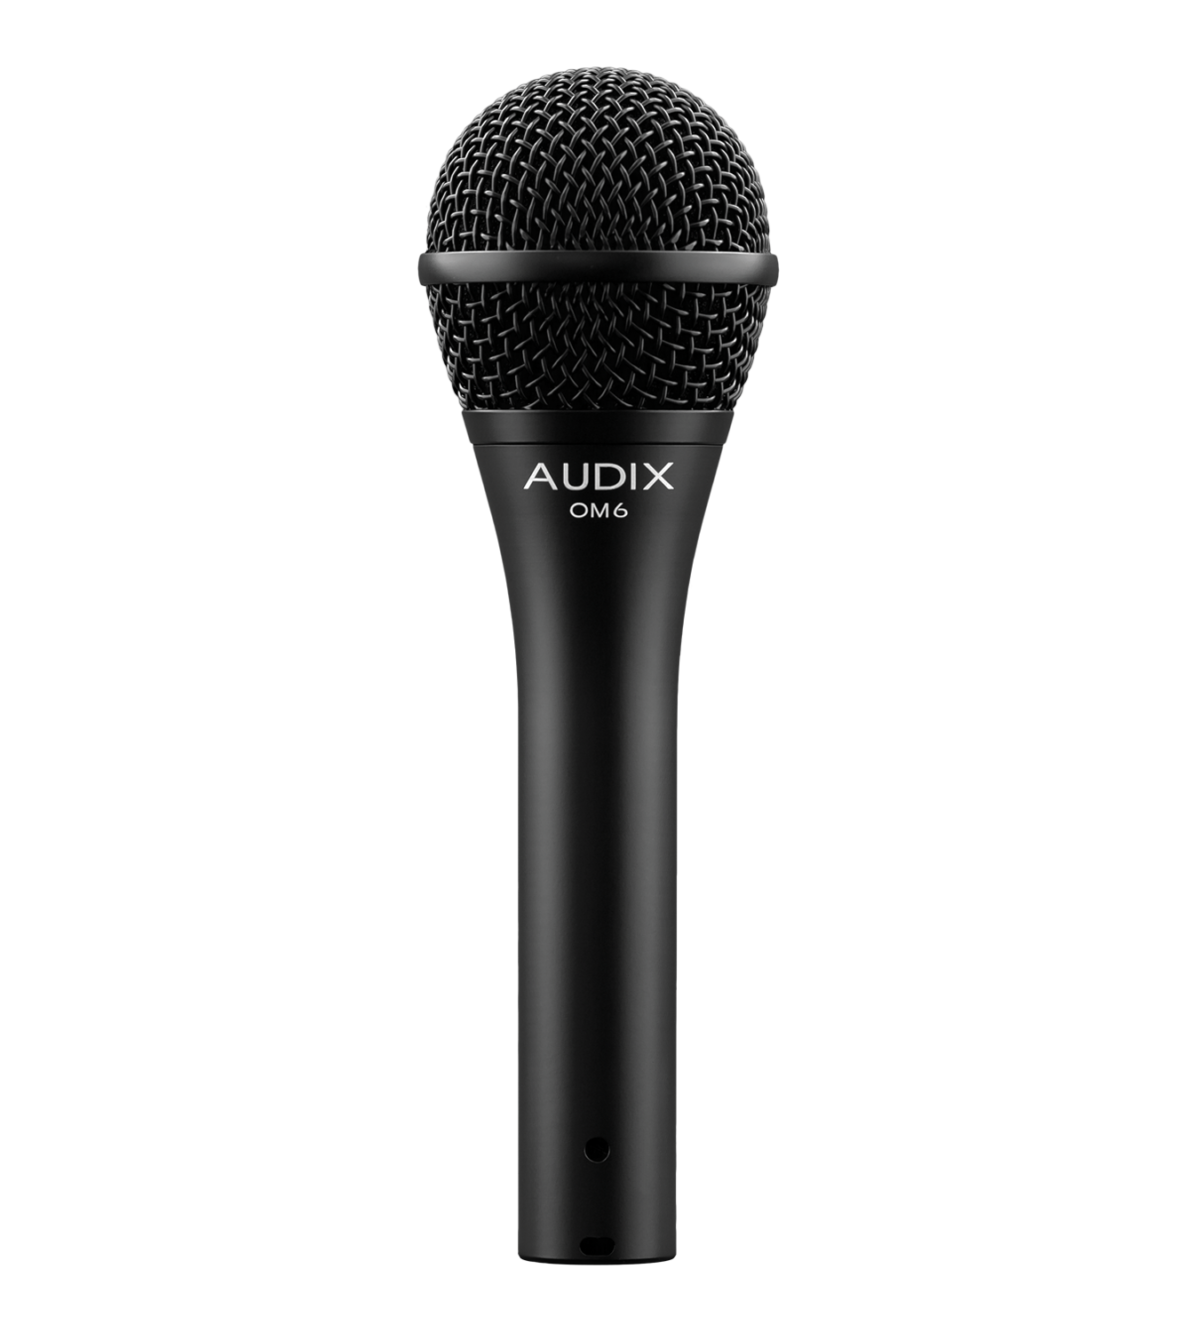 Audix OM6 Hypercardioid Dynamic Vocal Microphone